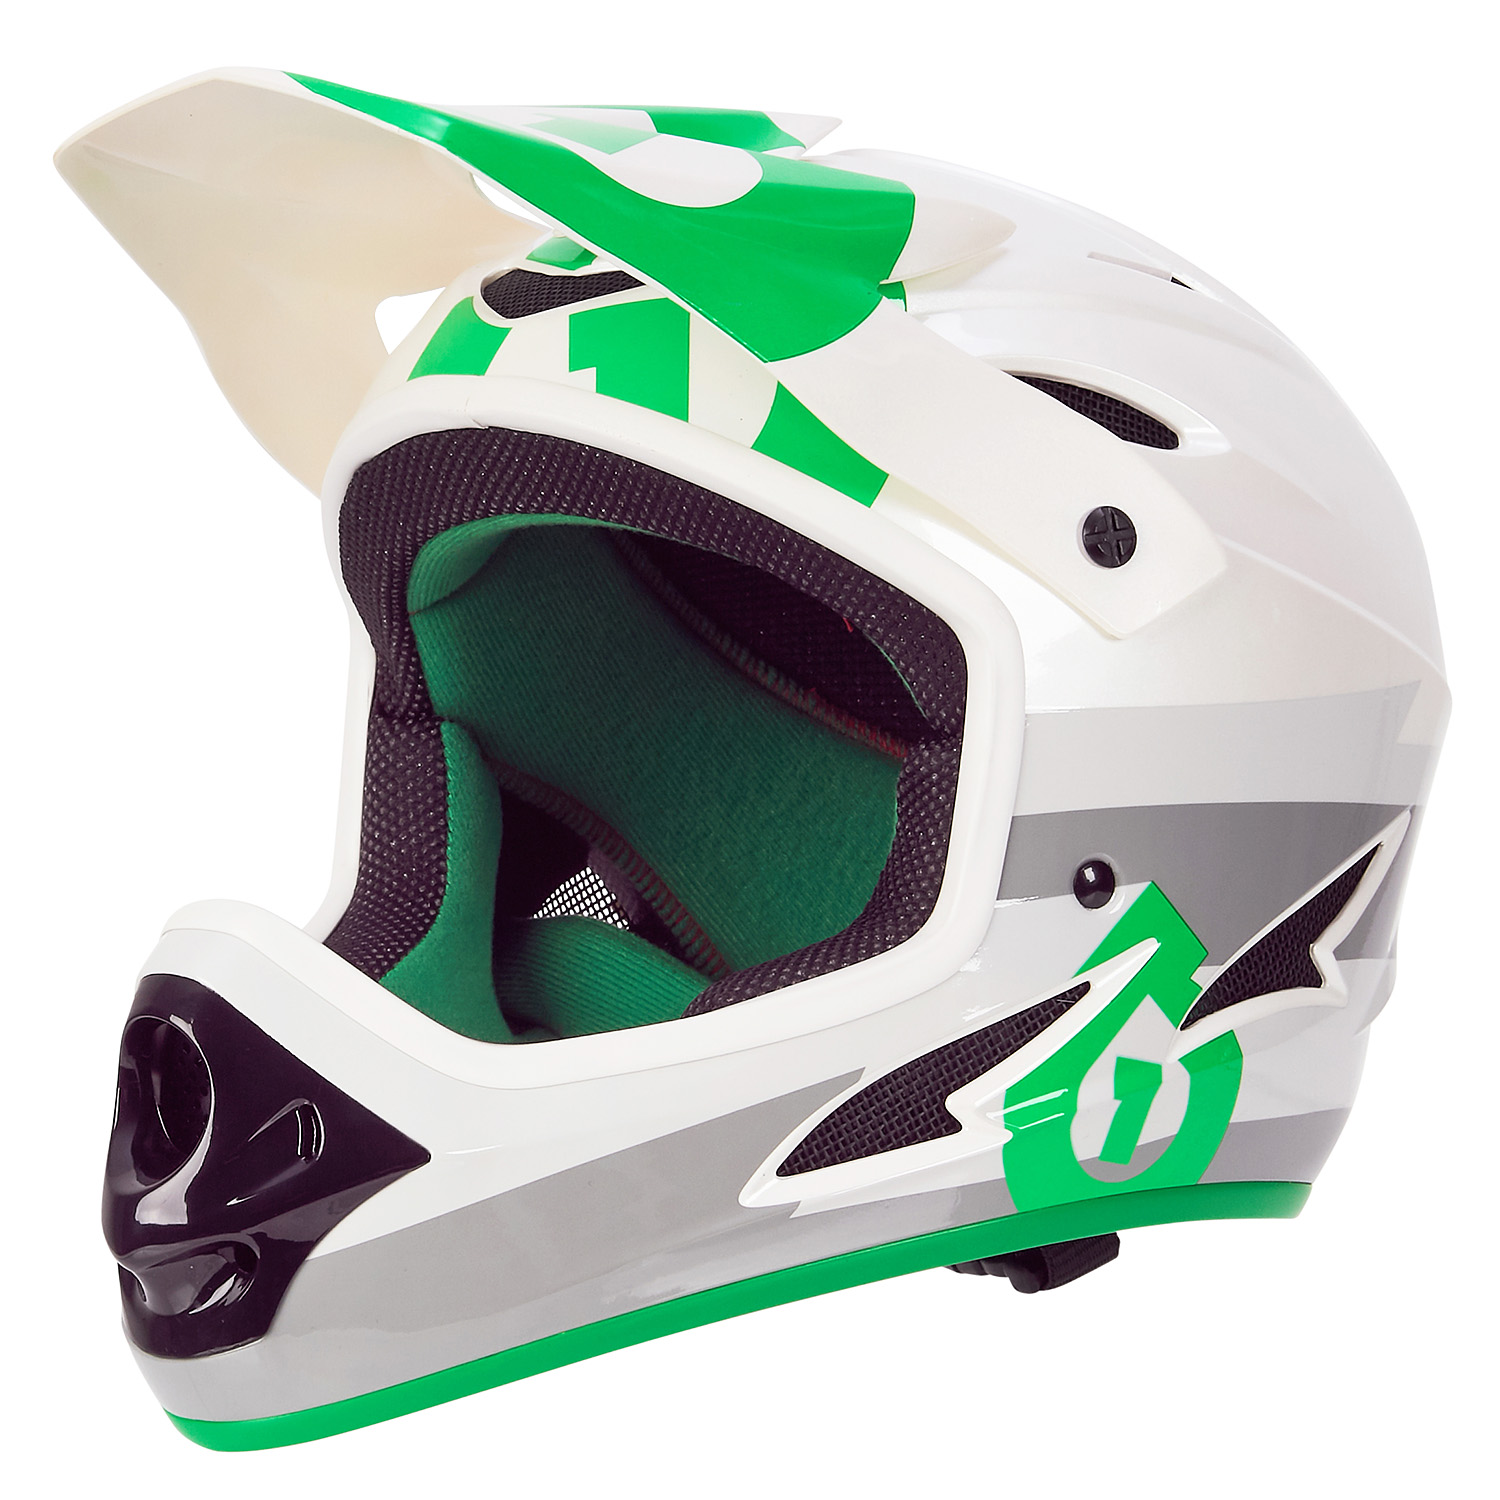 SixSixOne Downhill-MTB Helmet Comp Bolt - Grey/Green